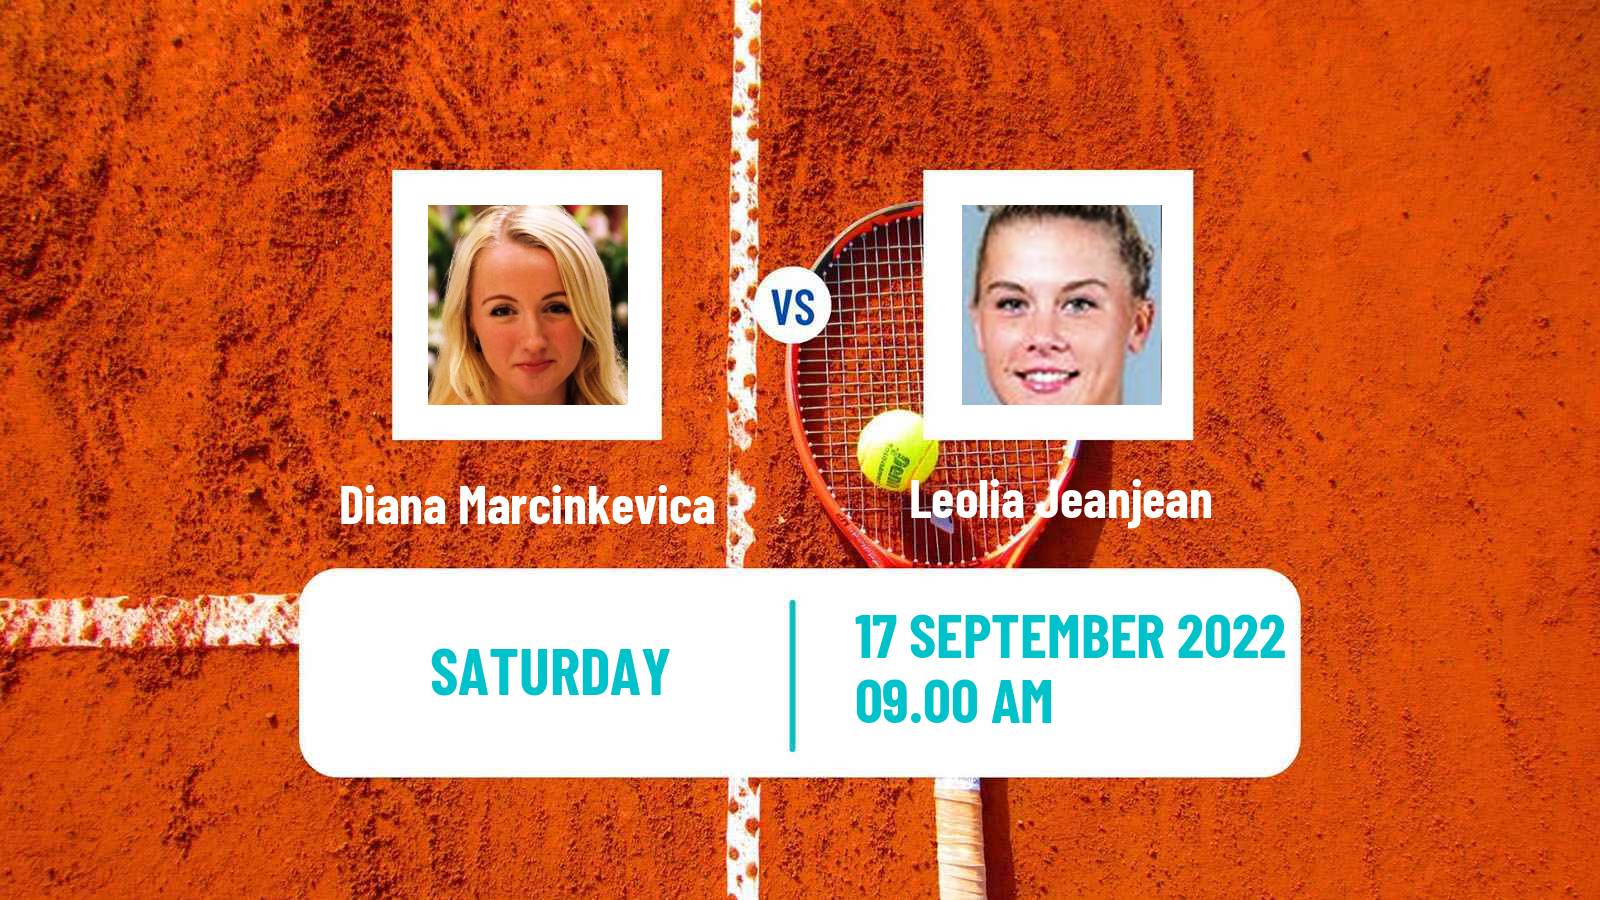 Tennis ATP Challenger Diana Marcinkevica - Leolia Jeanjean